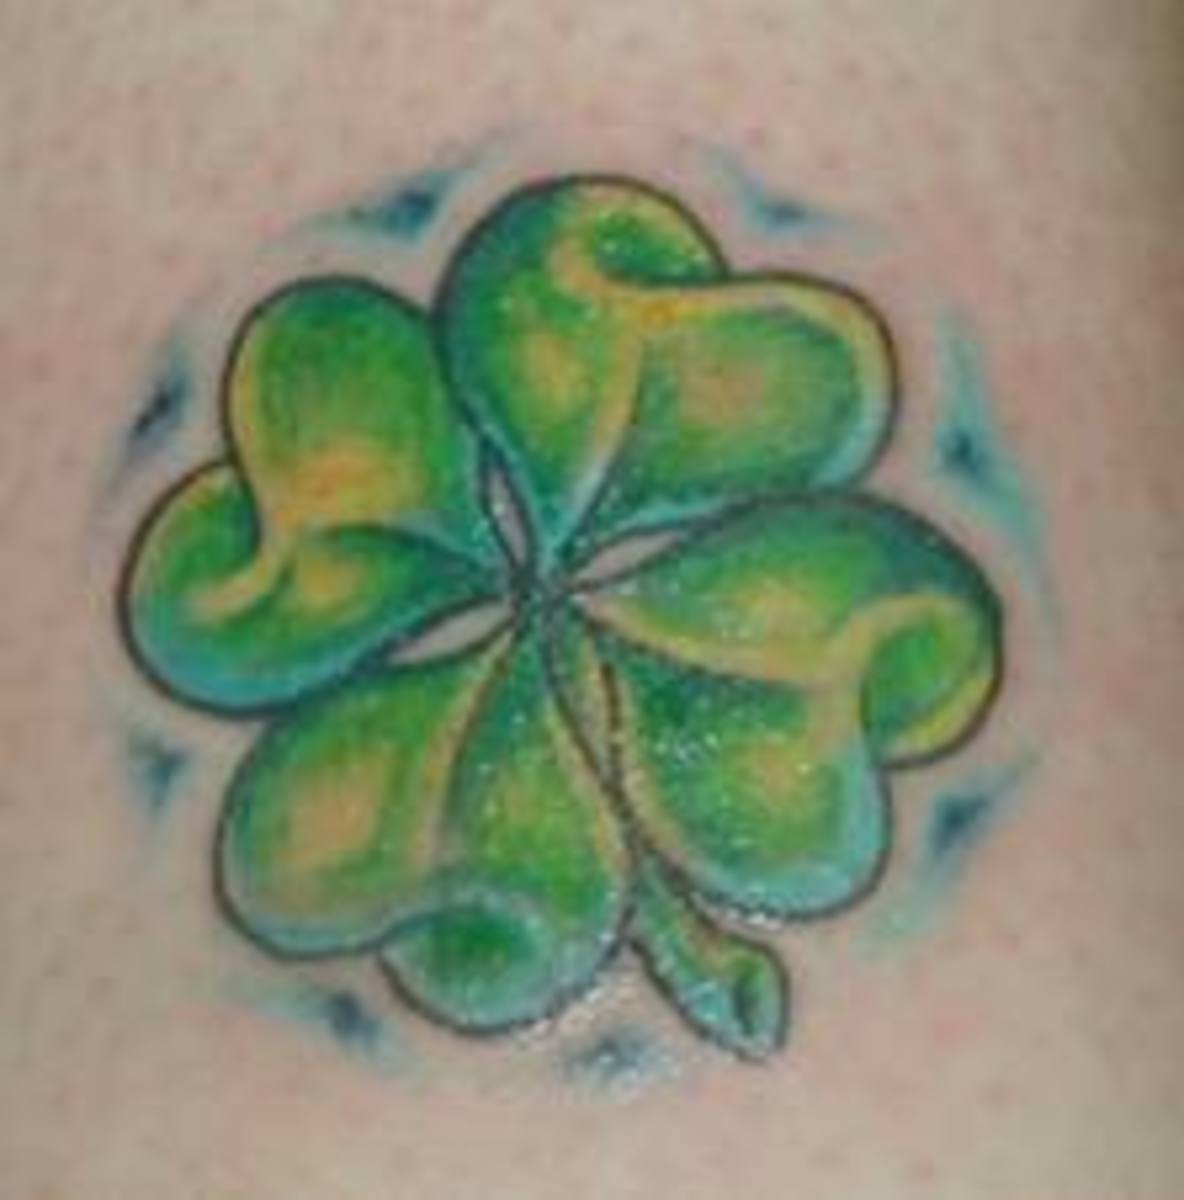 Irish tattoos: the most inspiring ideas • Go-to-Ireland.com